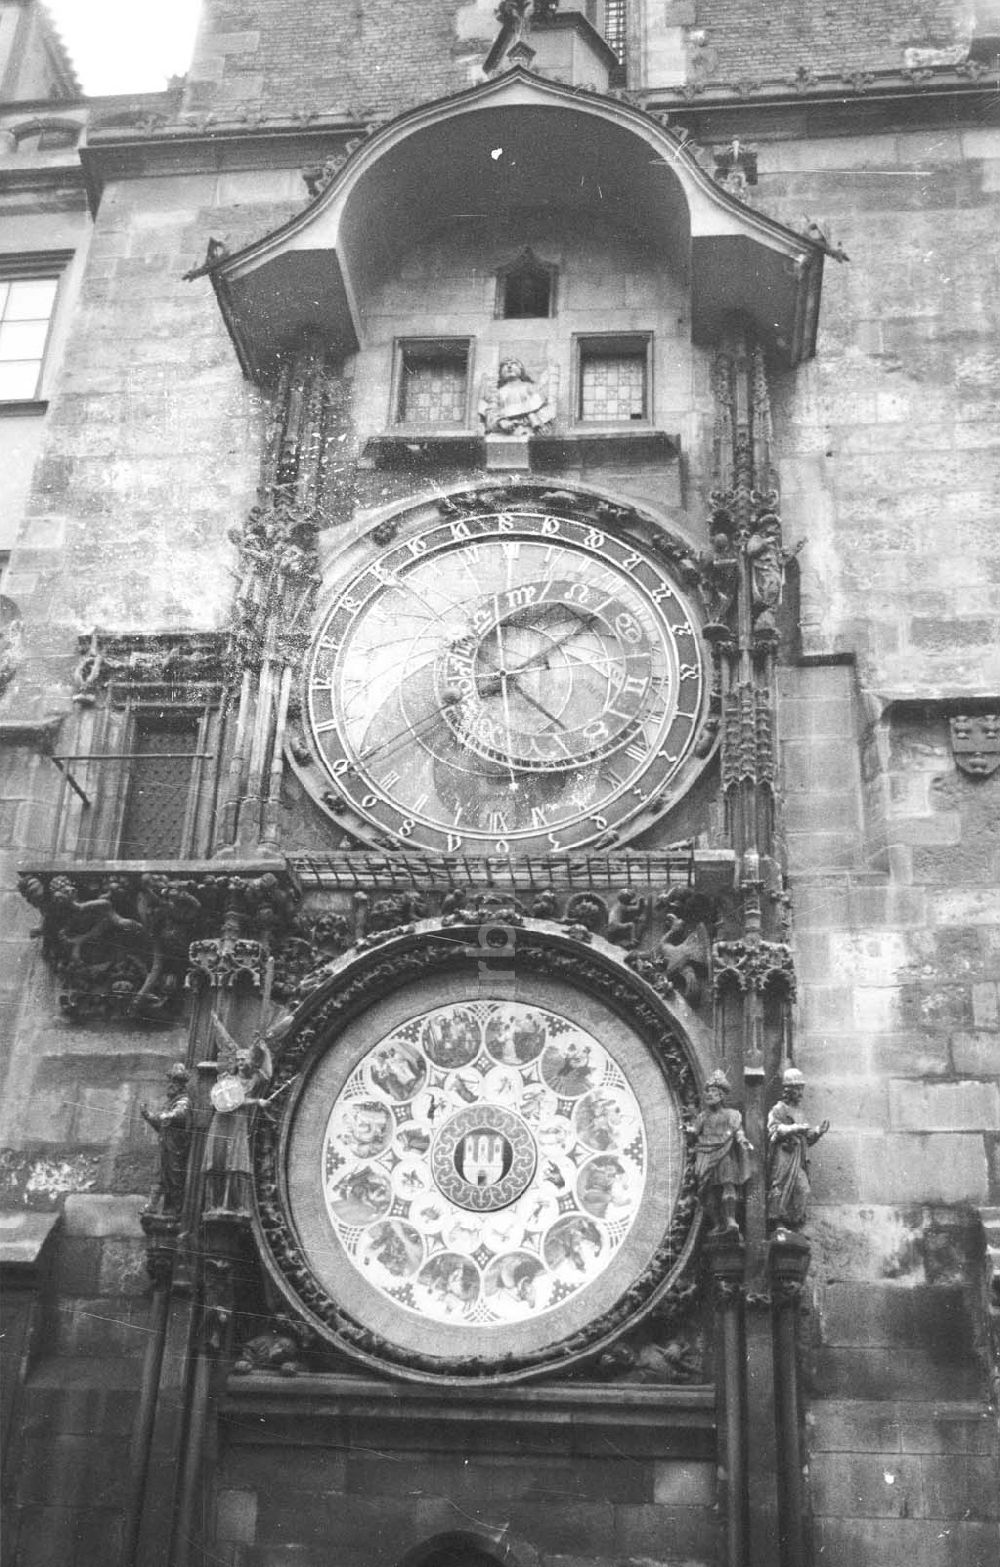 DDR-Bildarchiv: Prag - Astronomische Uhr, Prager Orloj, in Prag